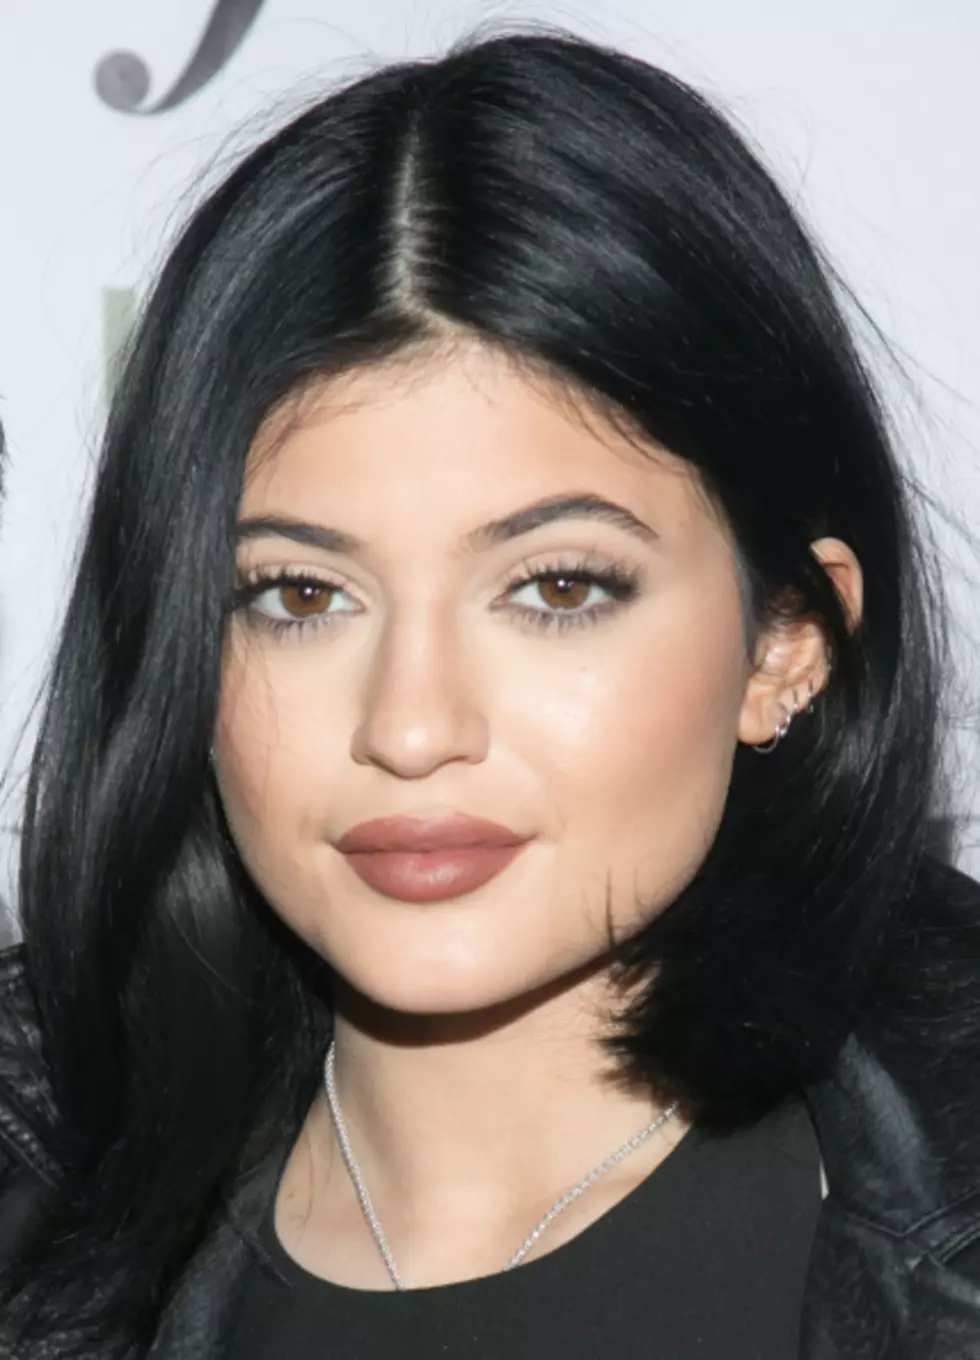 Is Kylie Jenner Morphing Into Kim Kardashian?